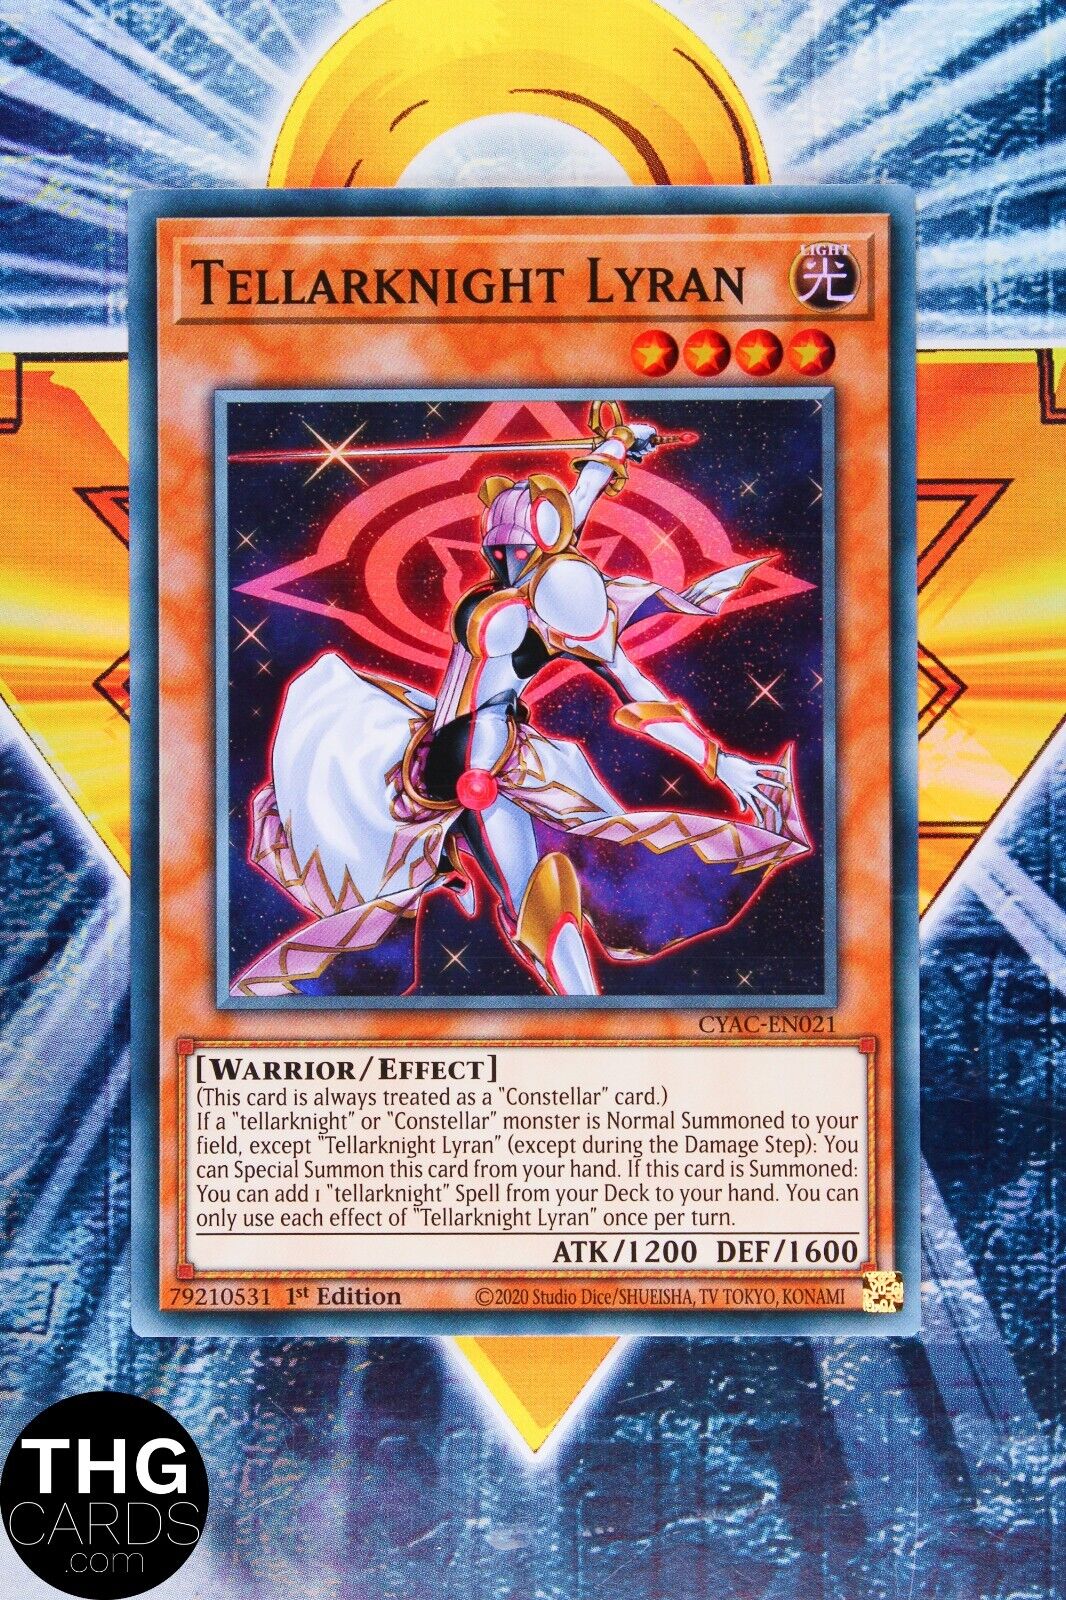 Tellarknight Lyran CYAC-EN021 1st Edition Super Rare Yugioh Card Playset